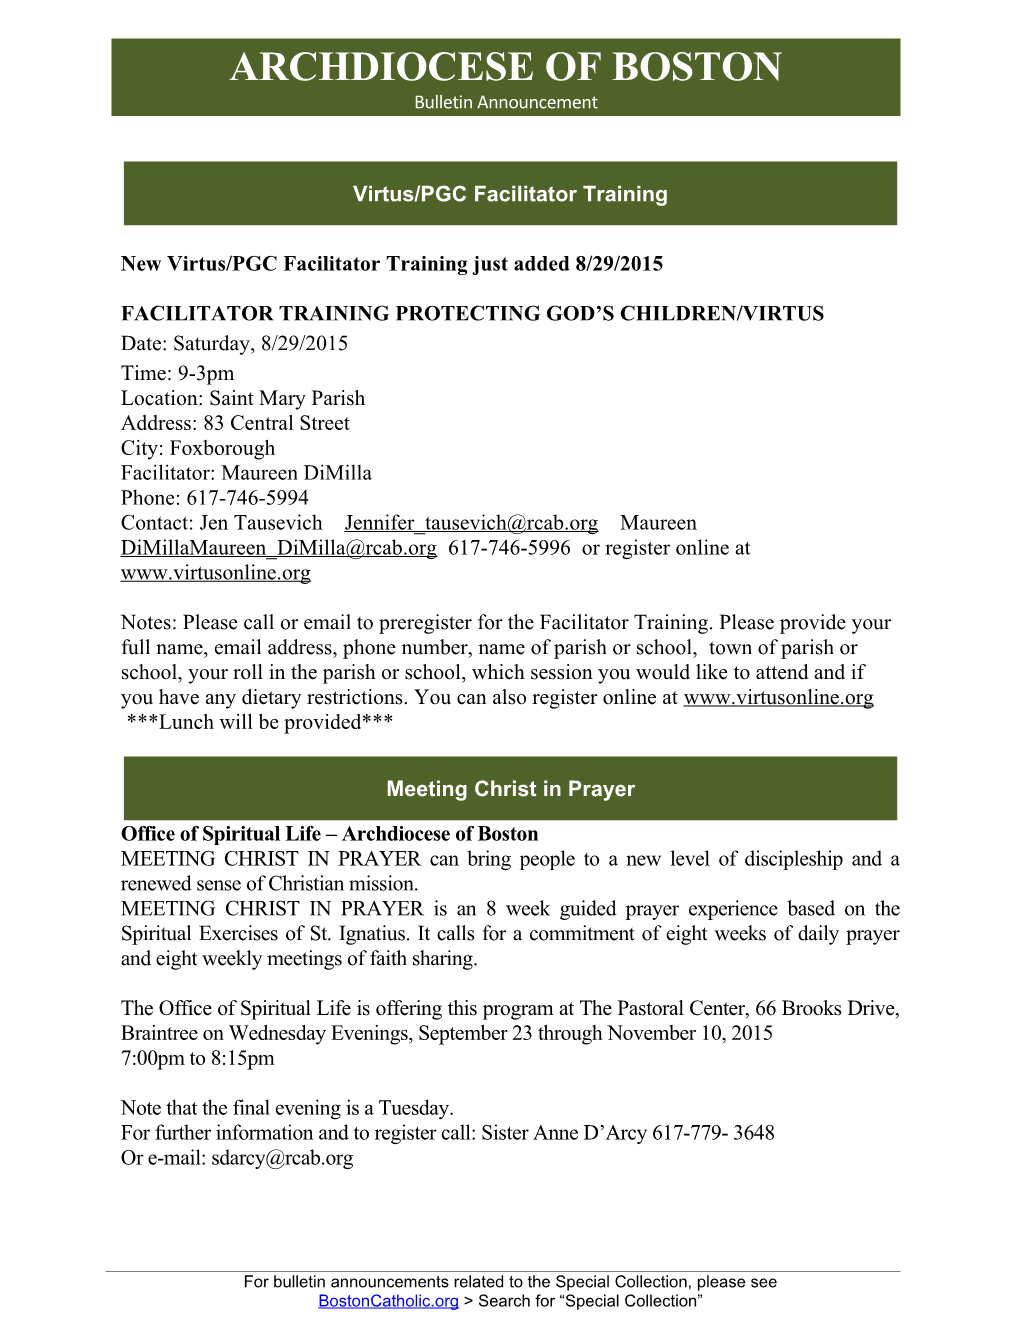 New Virtus/PGC Facilitator Training Just Added 8/29/2015